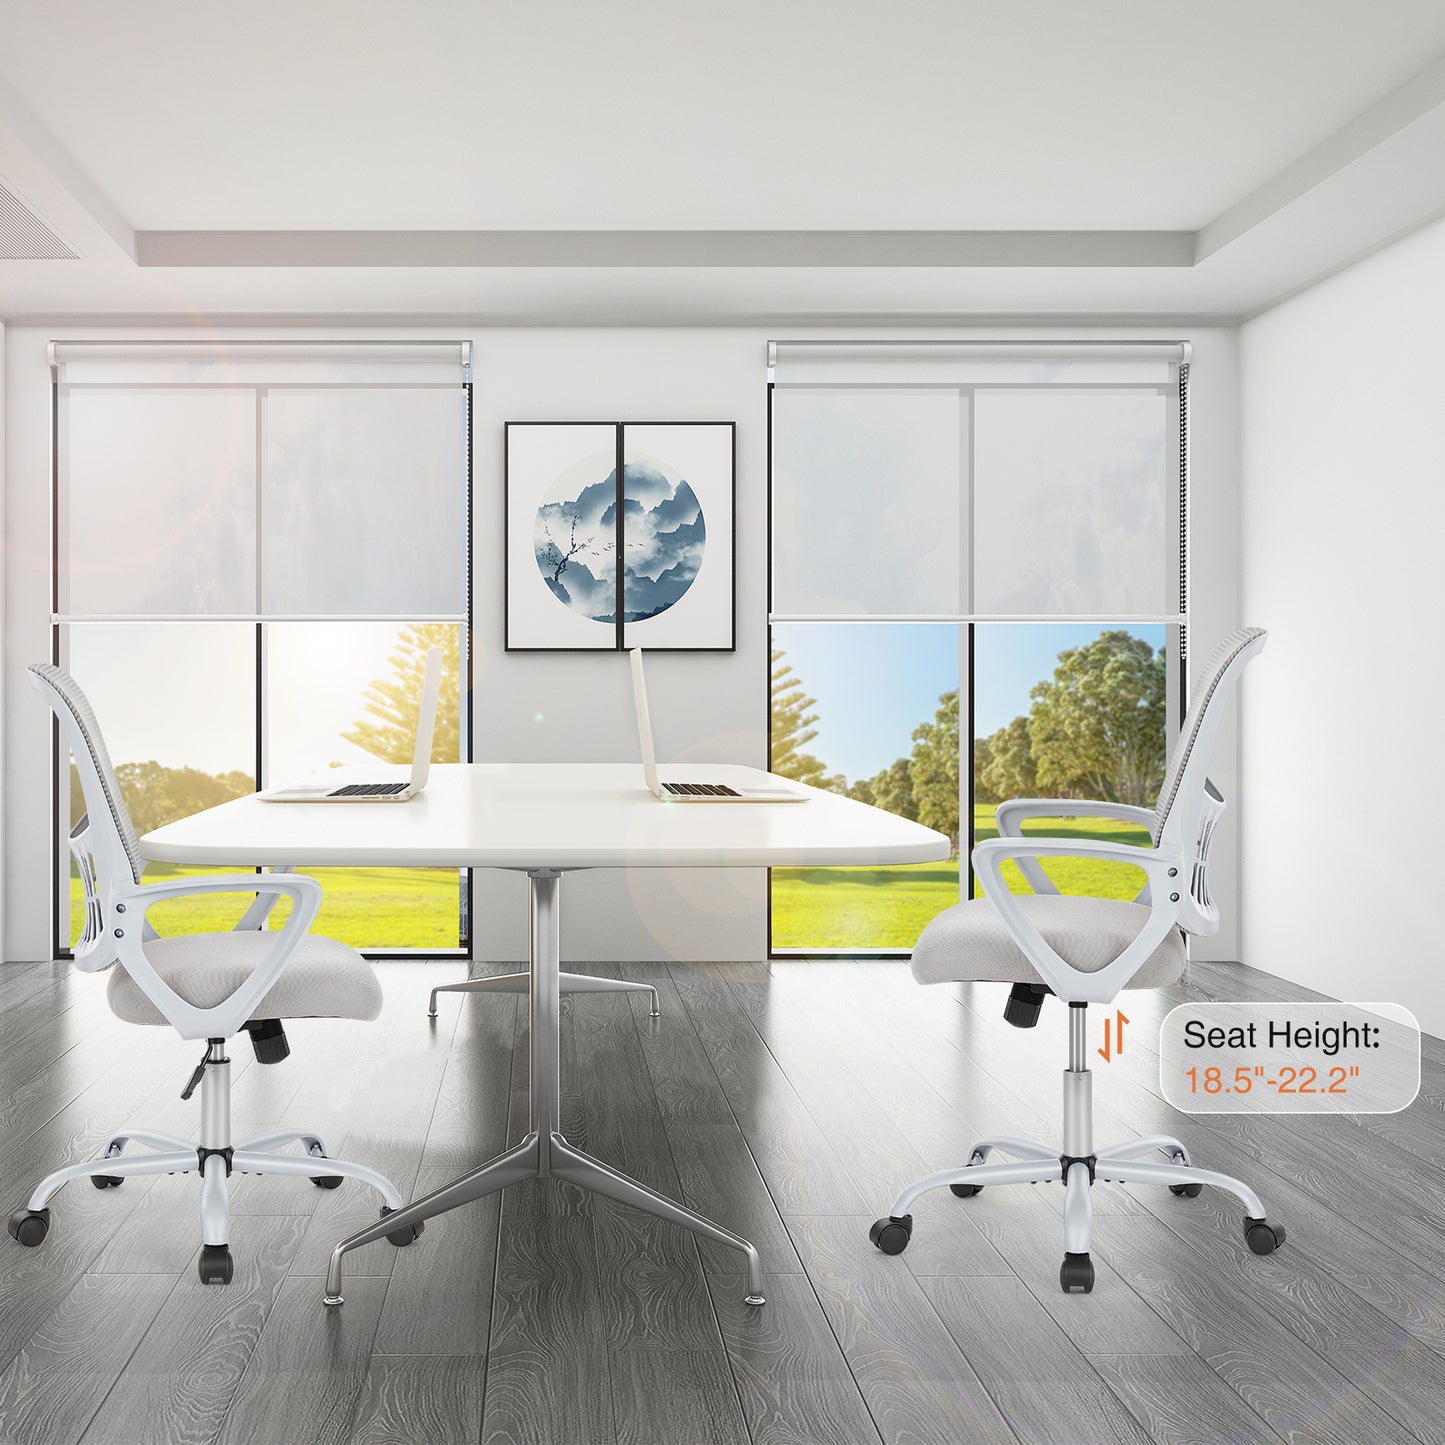 Fixed armrests ergonomic office chair - Ukerr Home